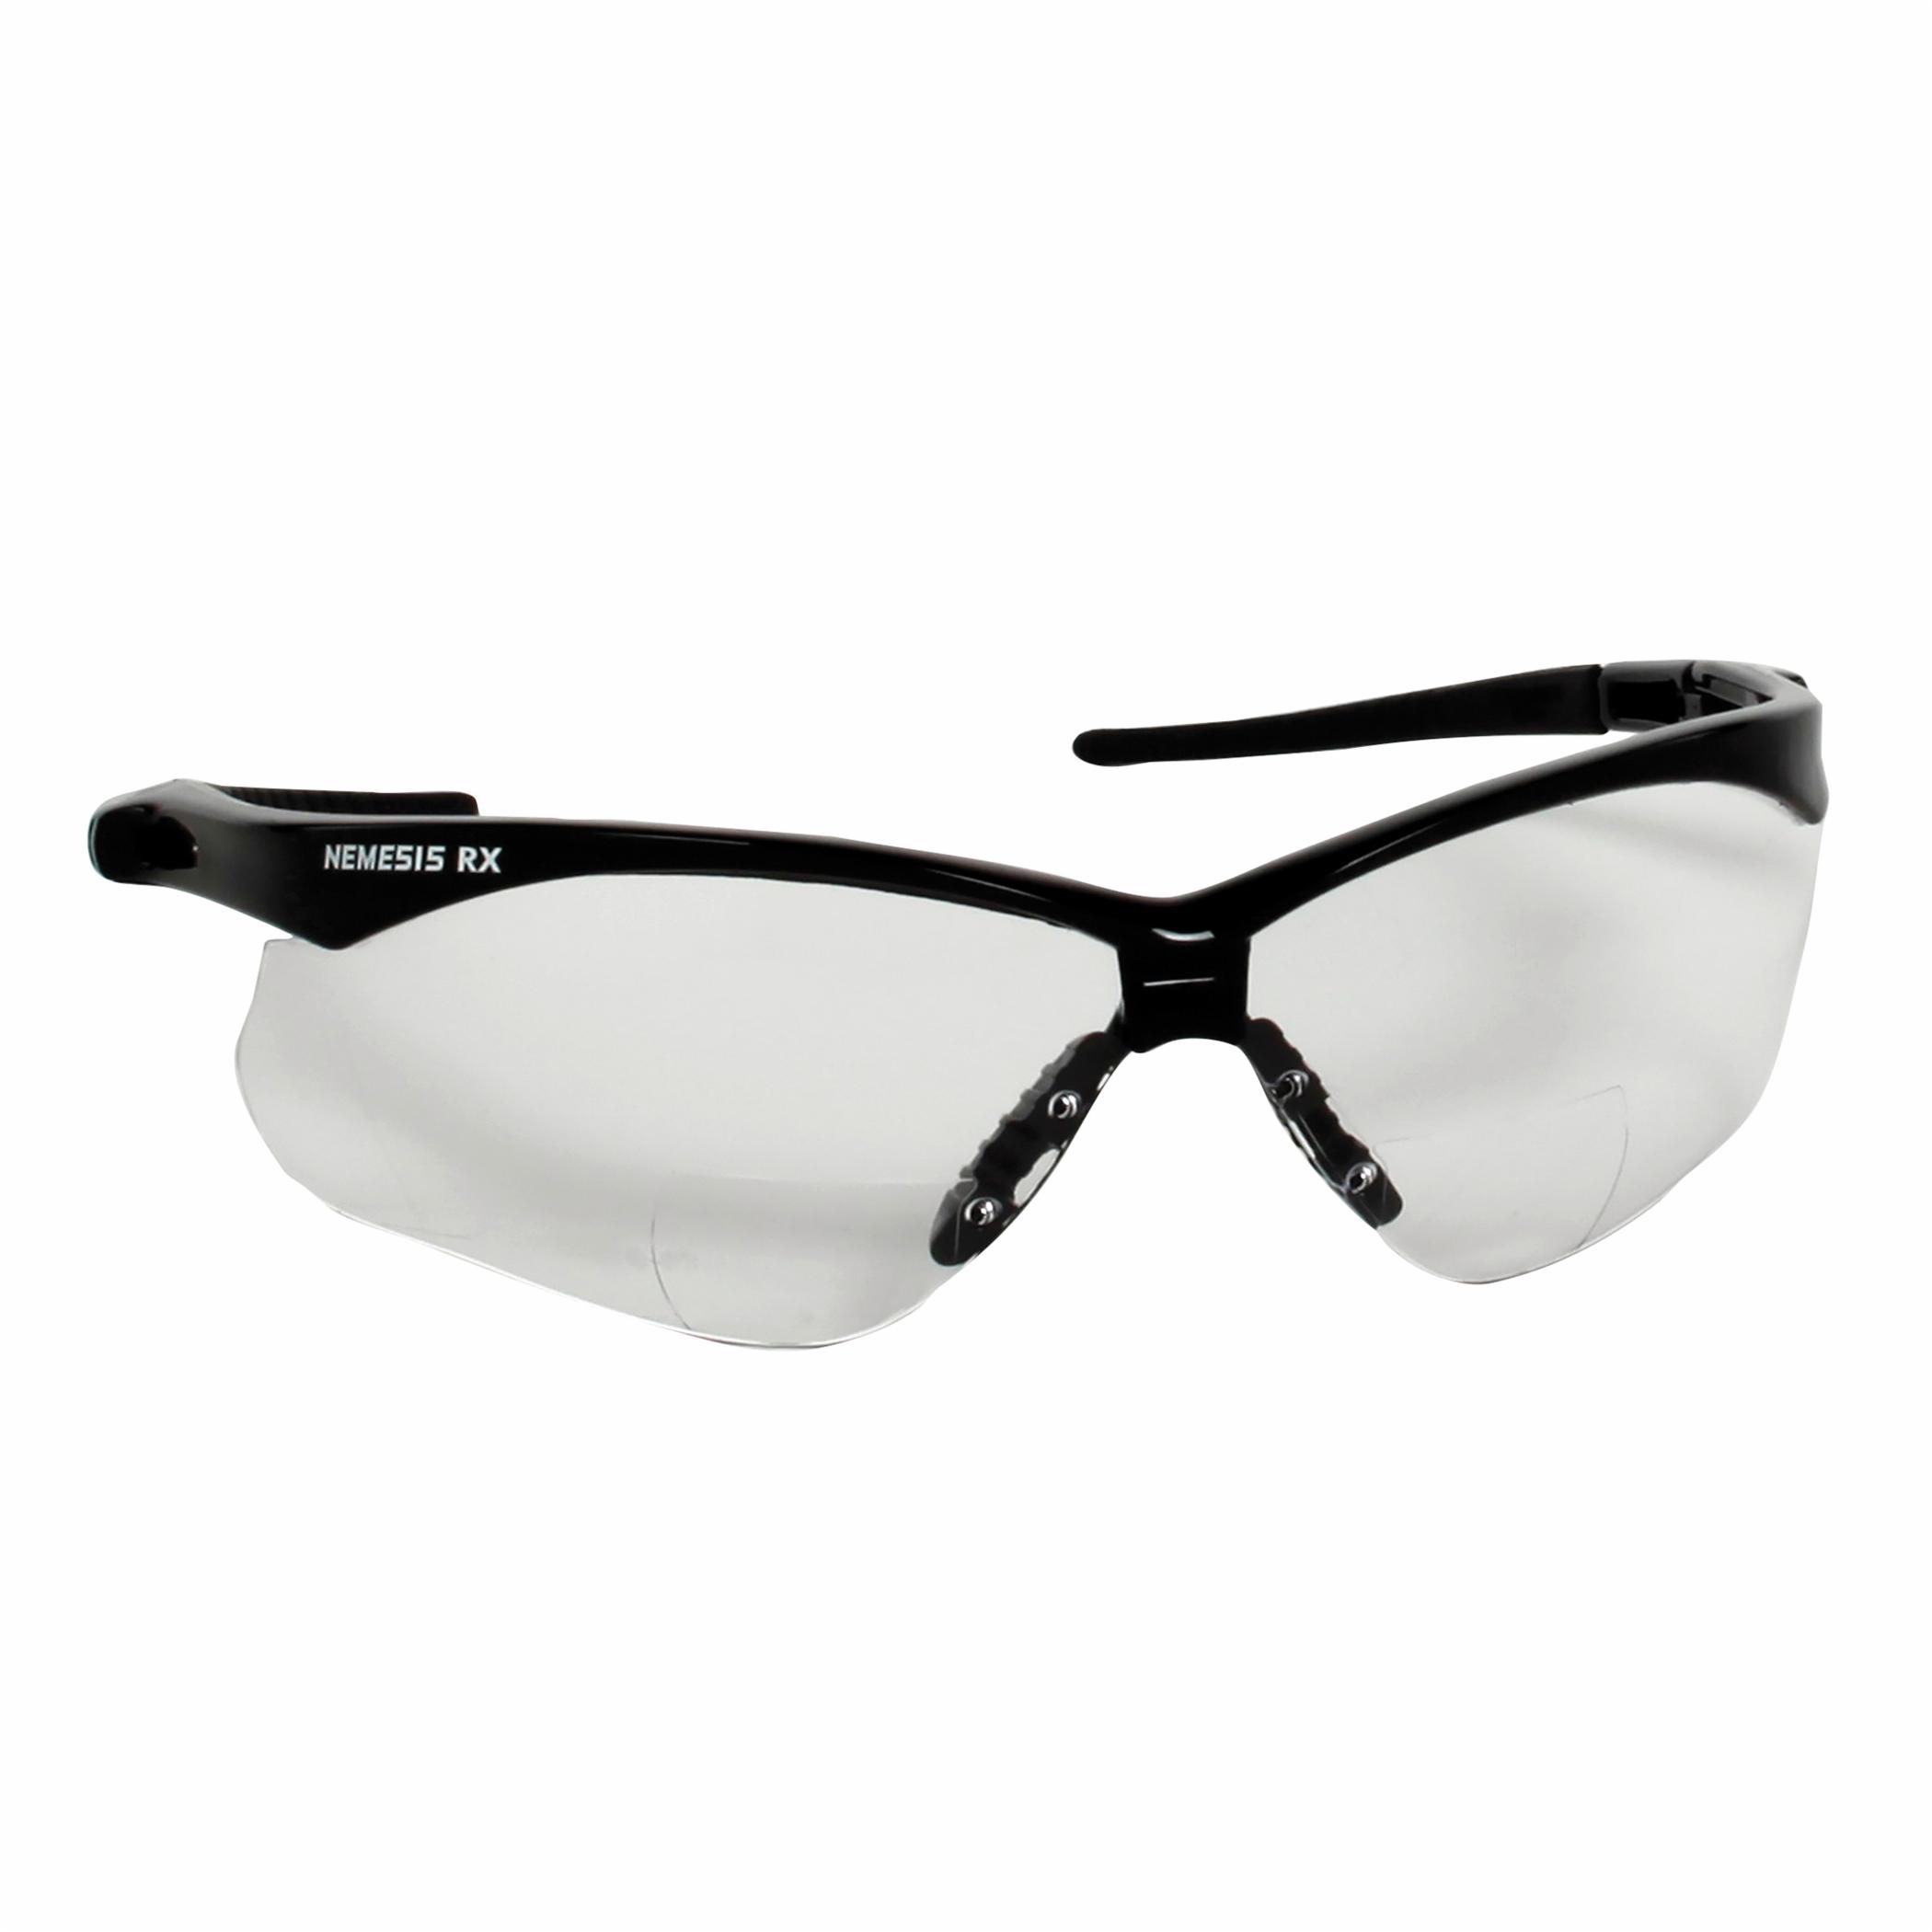 Bouton® 250-27-0125 Zenon Z12R™ 1-Piece Bi-Focal Lens Safety Reading Eyewear, 2.5 Diopter, Gray Lens, Polycarbonate Frame, Yes UV Protection, ANSI Z87.1+/Z87.1-2015